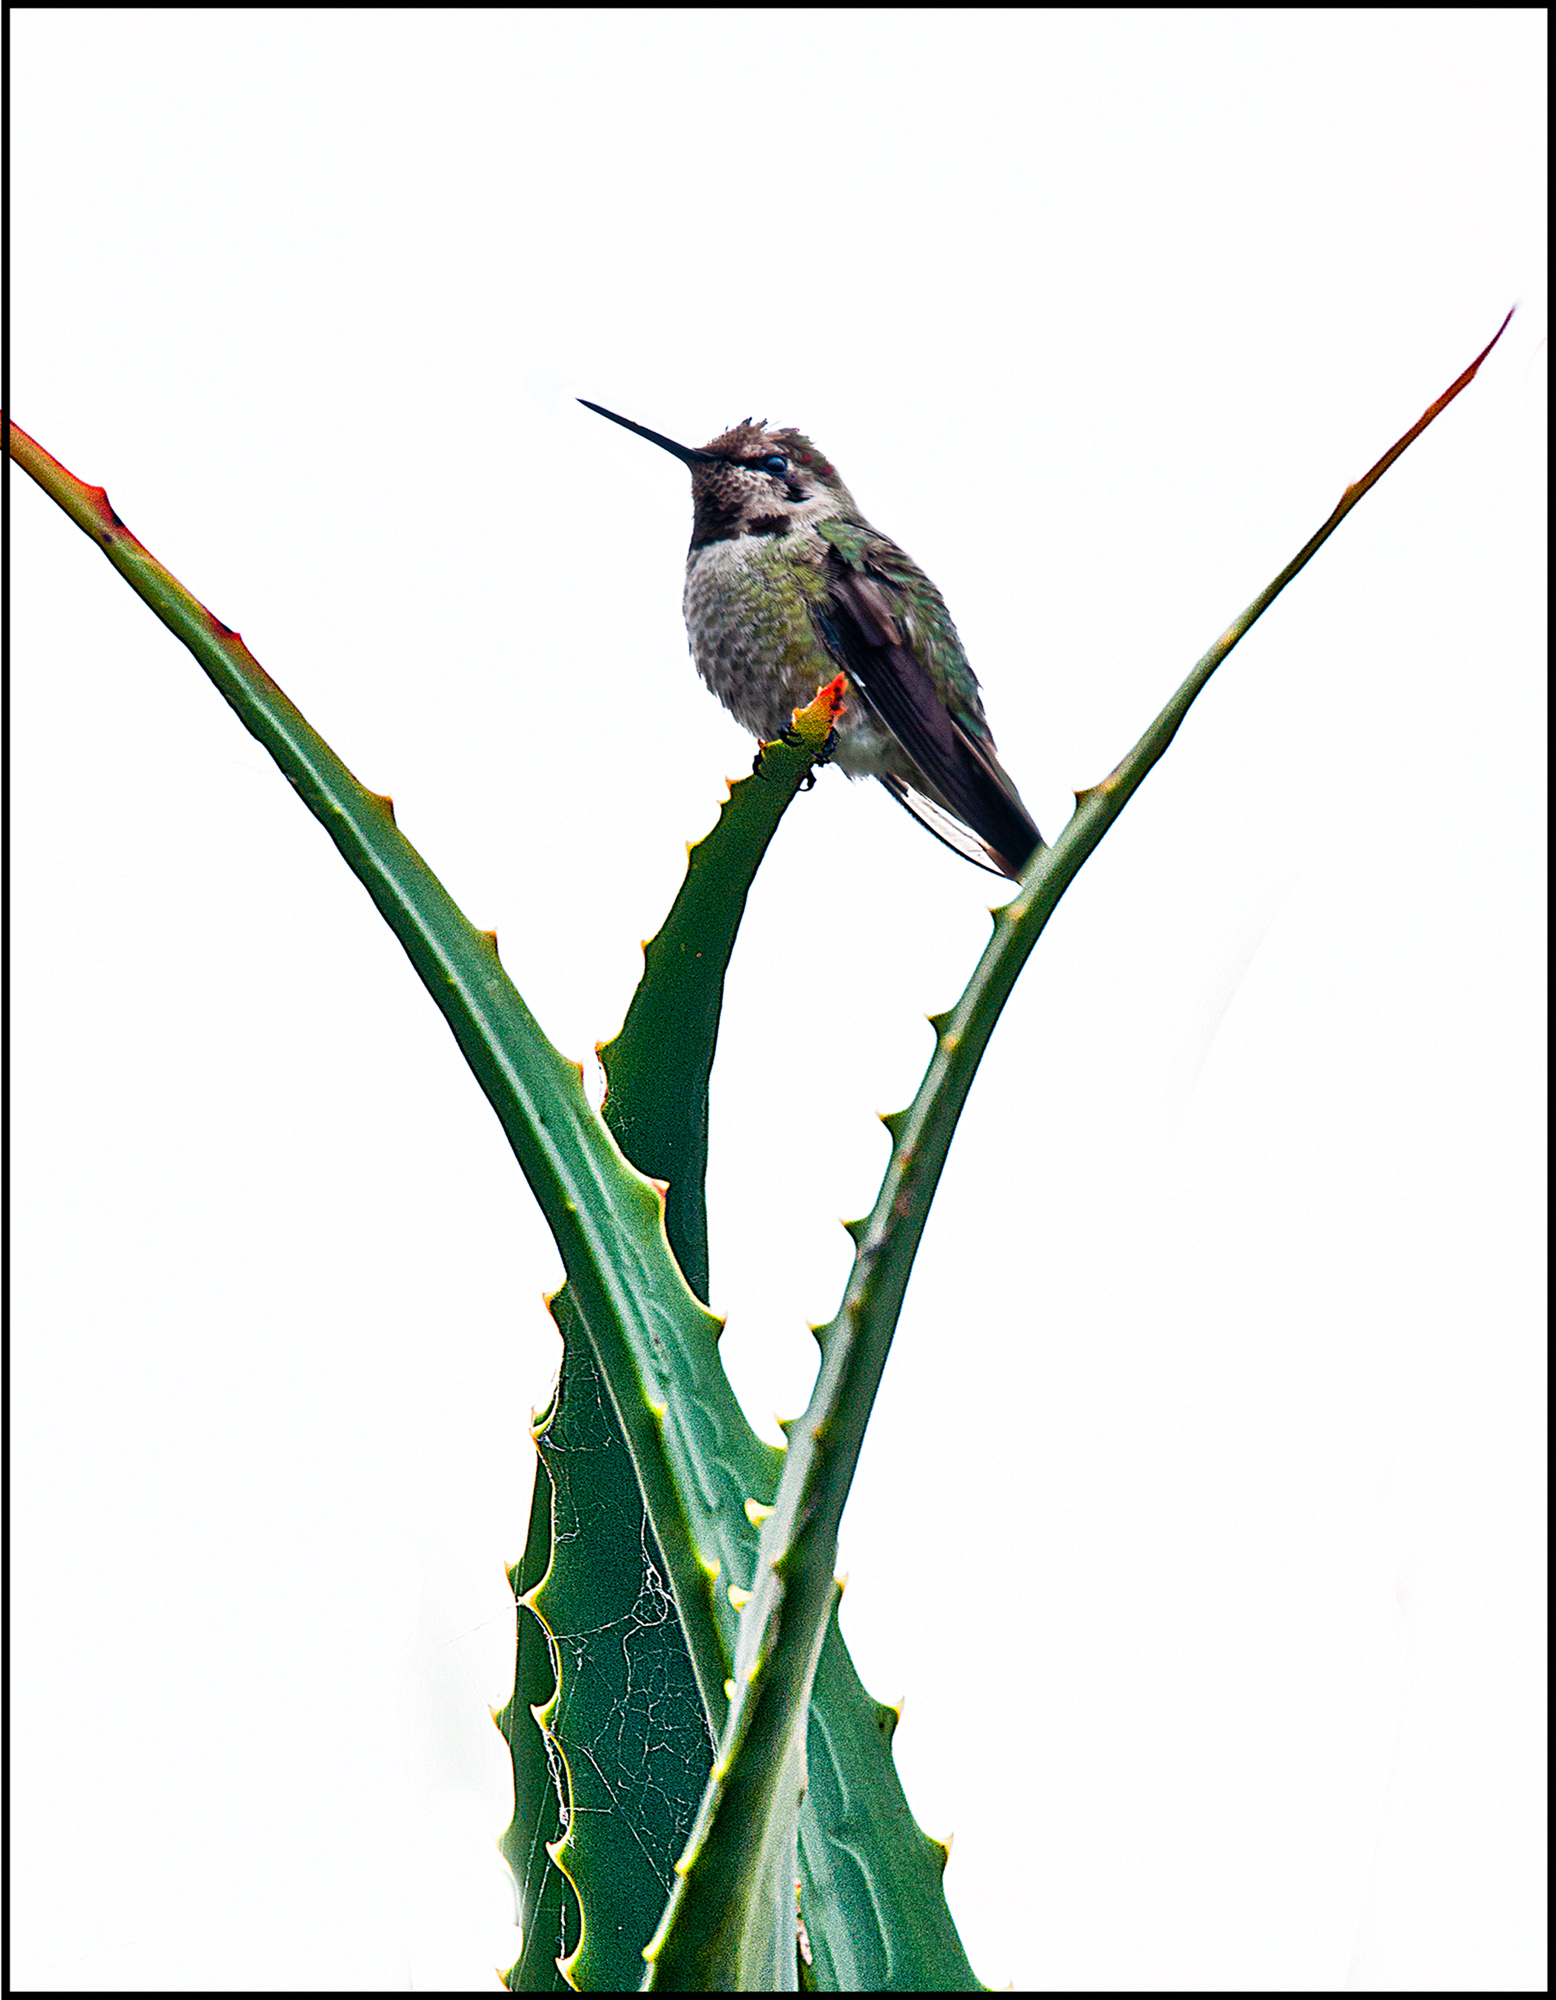 Hummingbird on Cactus